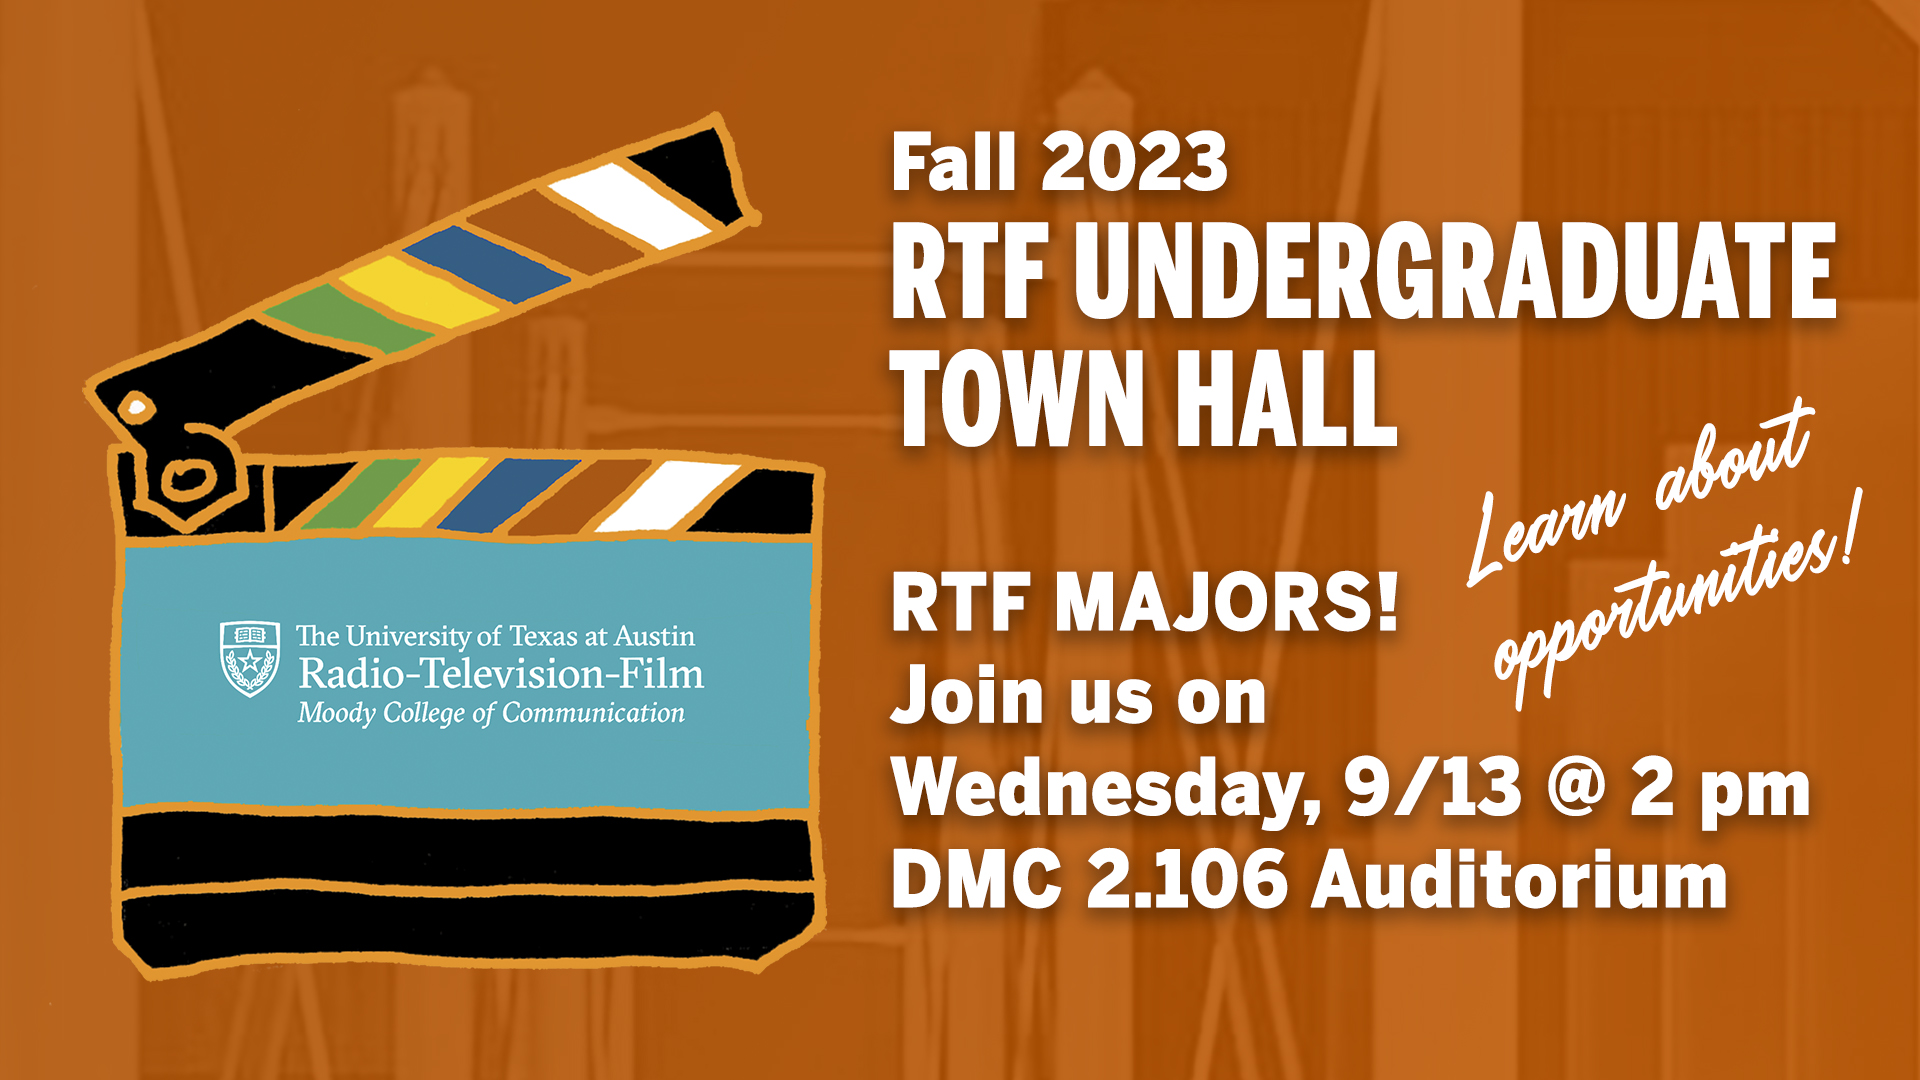 Fall 2023 RTF Undergraduate Town Hall 9/13 at 2 pm in DMC 2.106